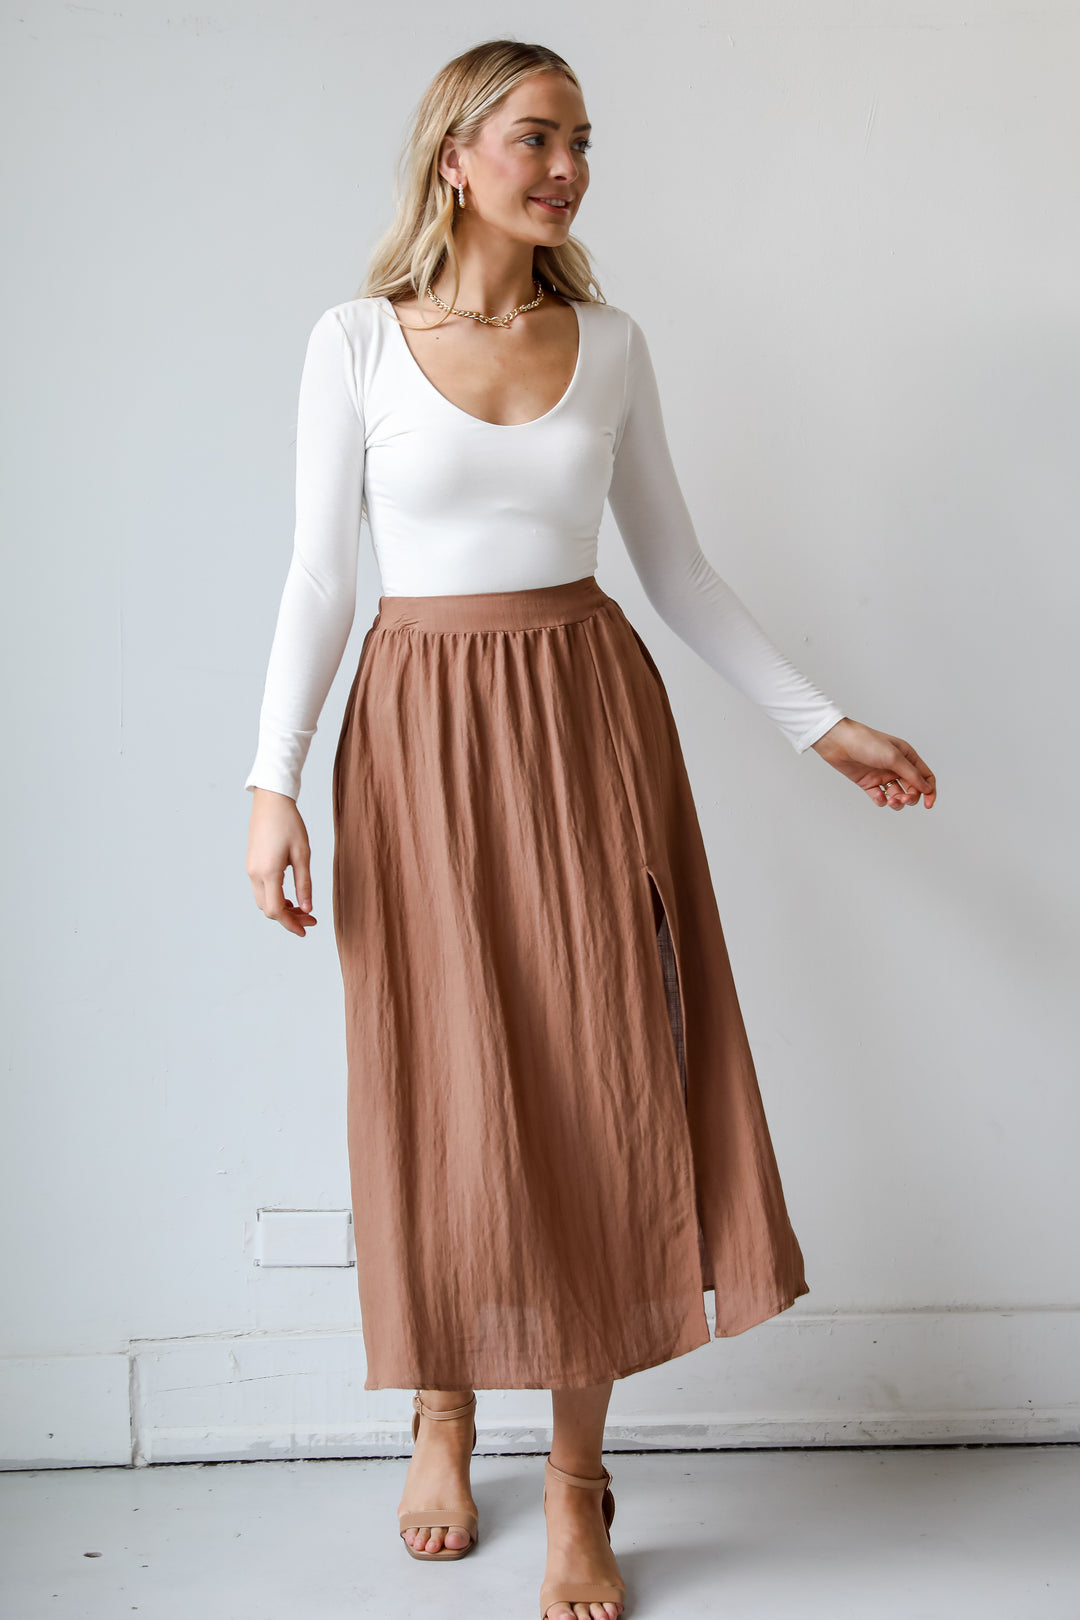 skirt with slit